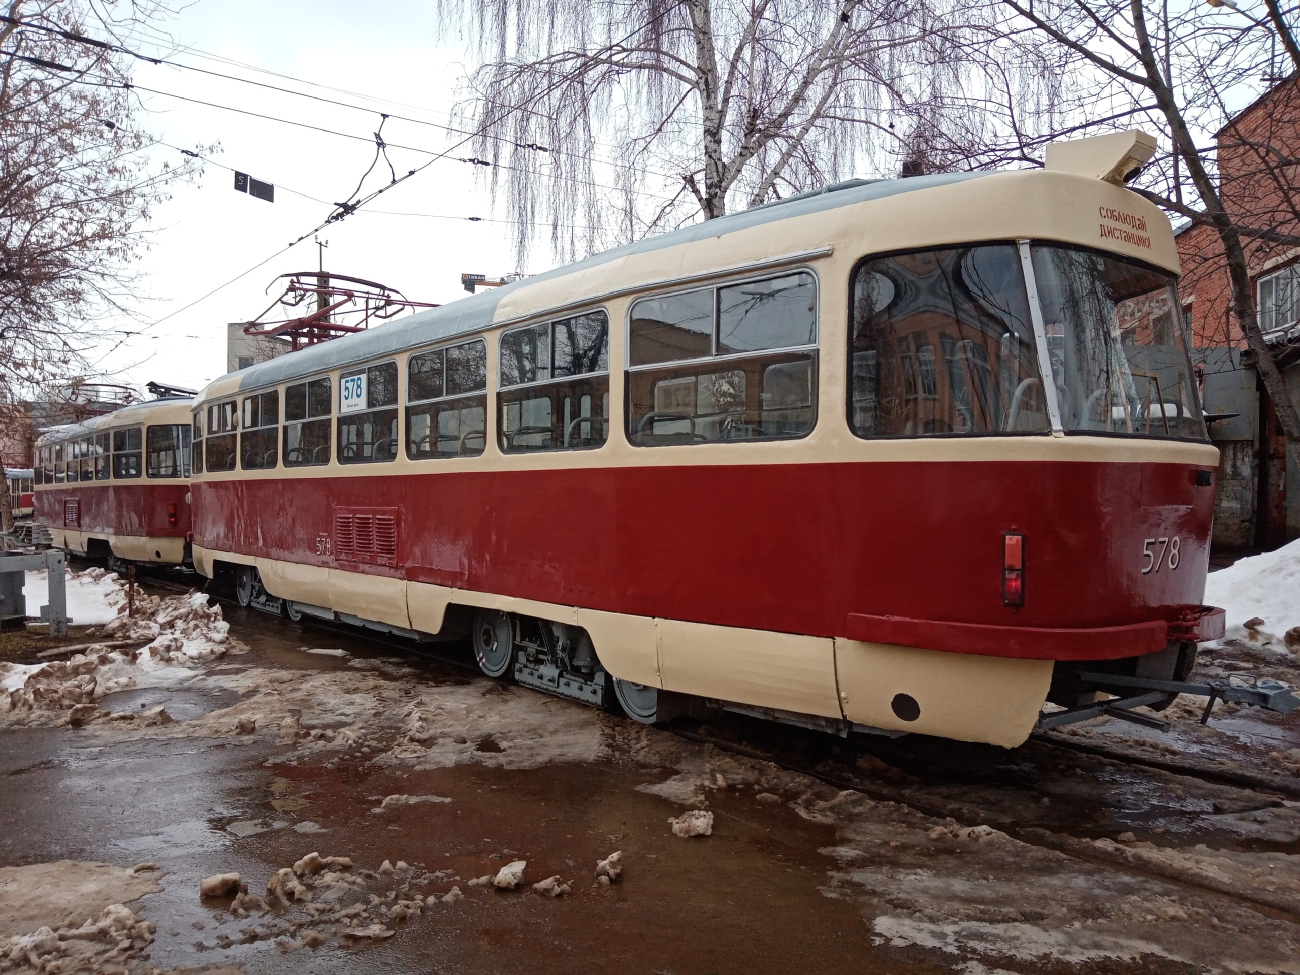 Yekaterinburg, Tatra T3SU nr. 578